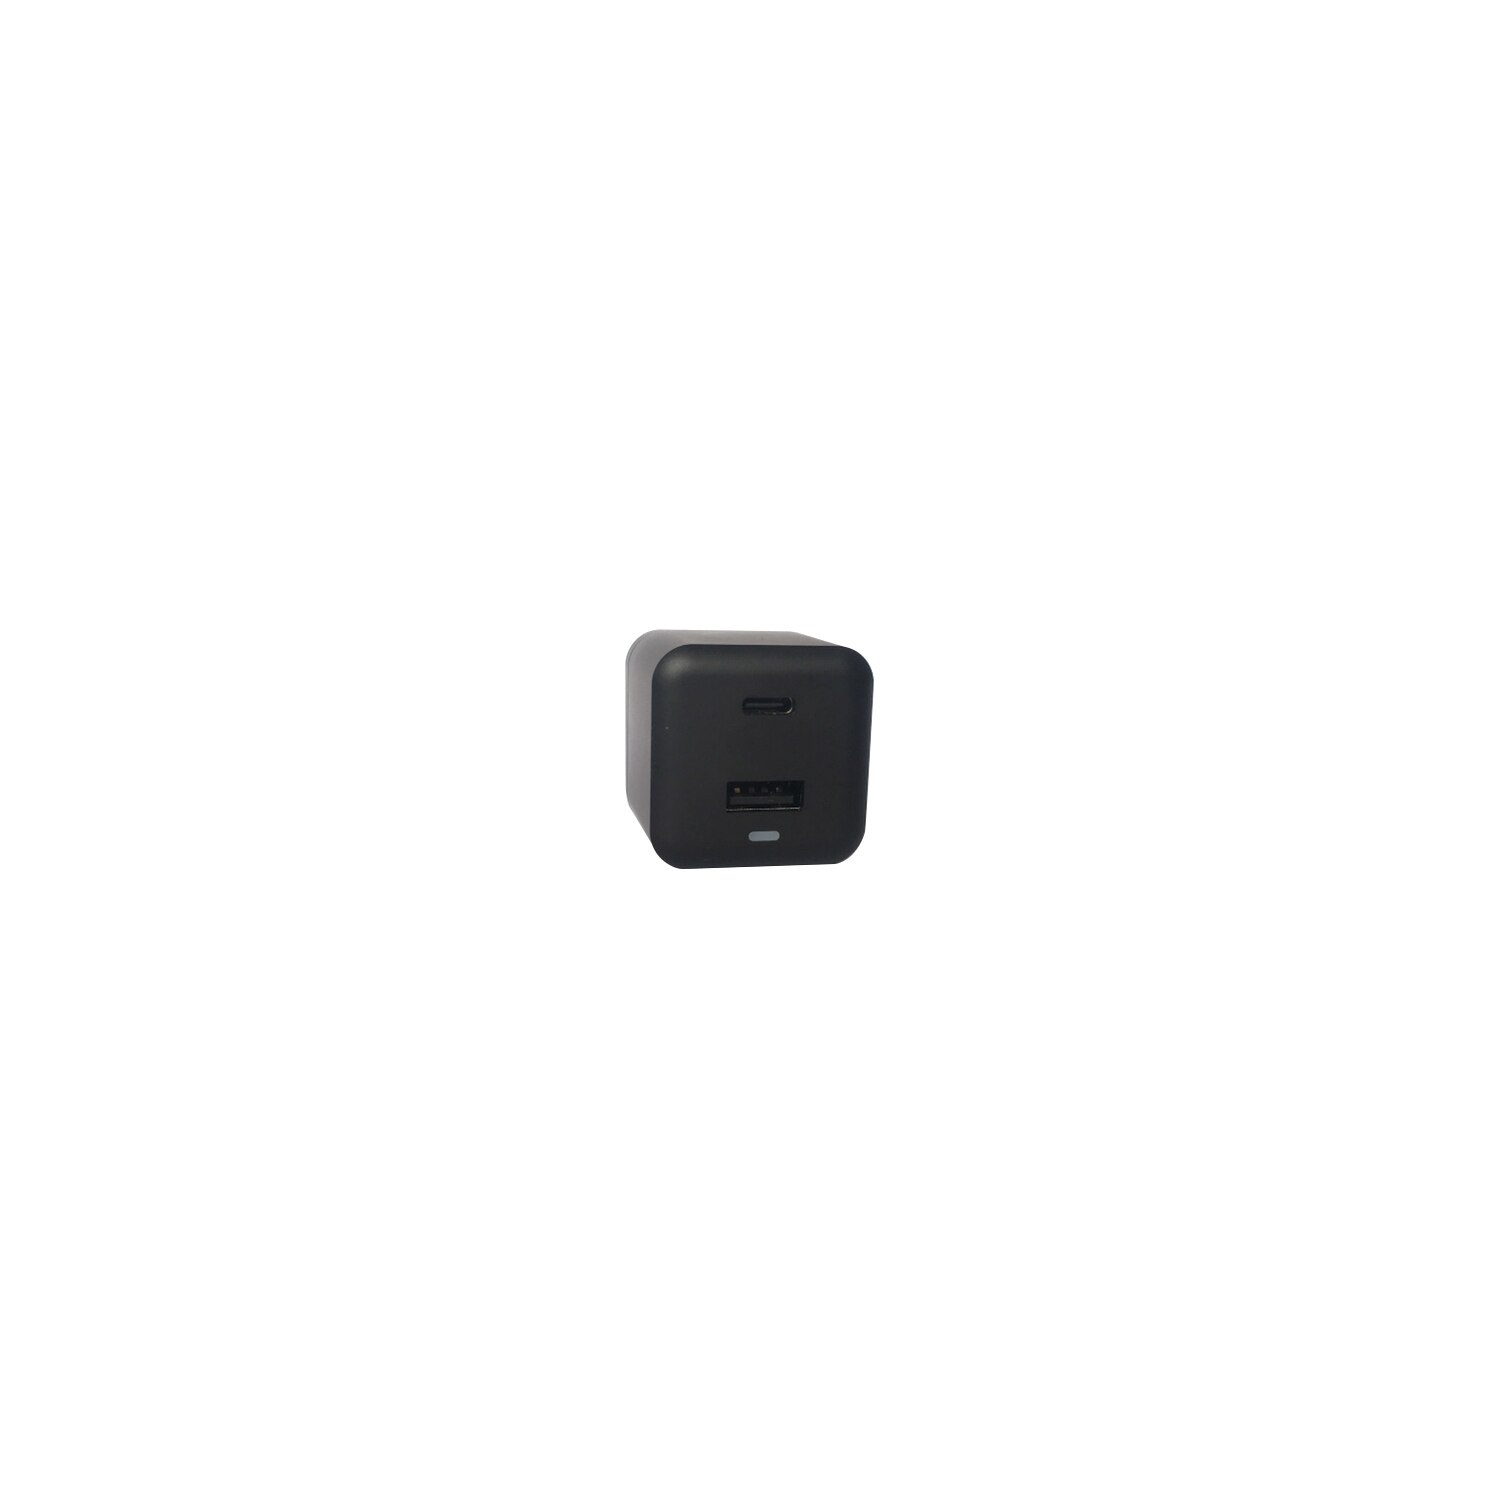 OnHand Dual Port Wall Adapter, USB-A & USB-C, Black